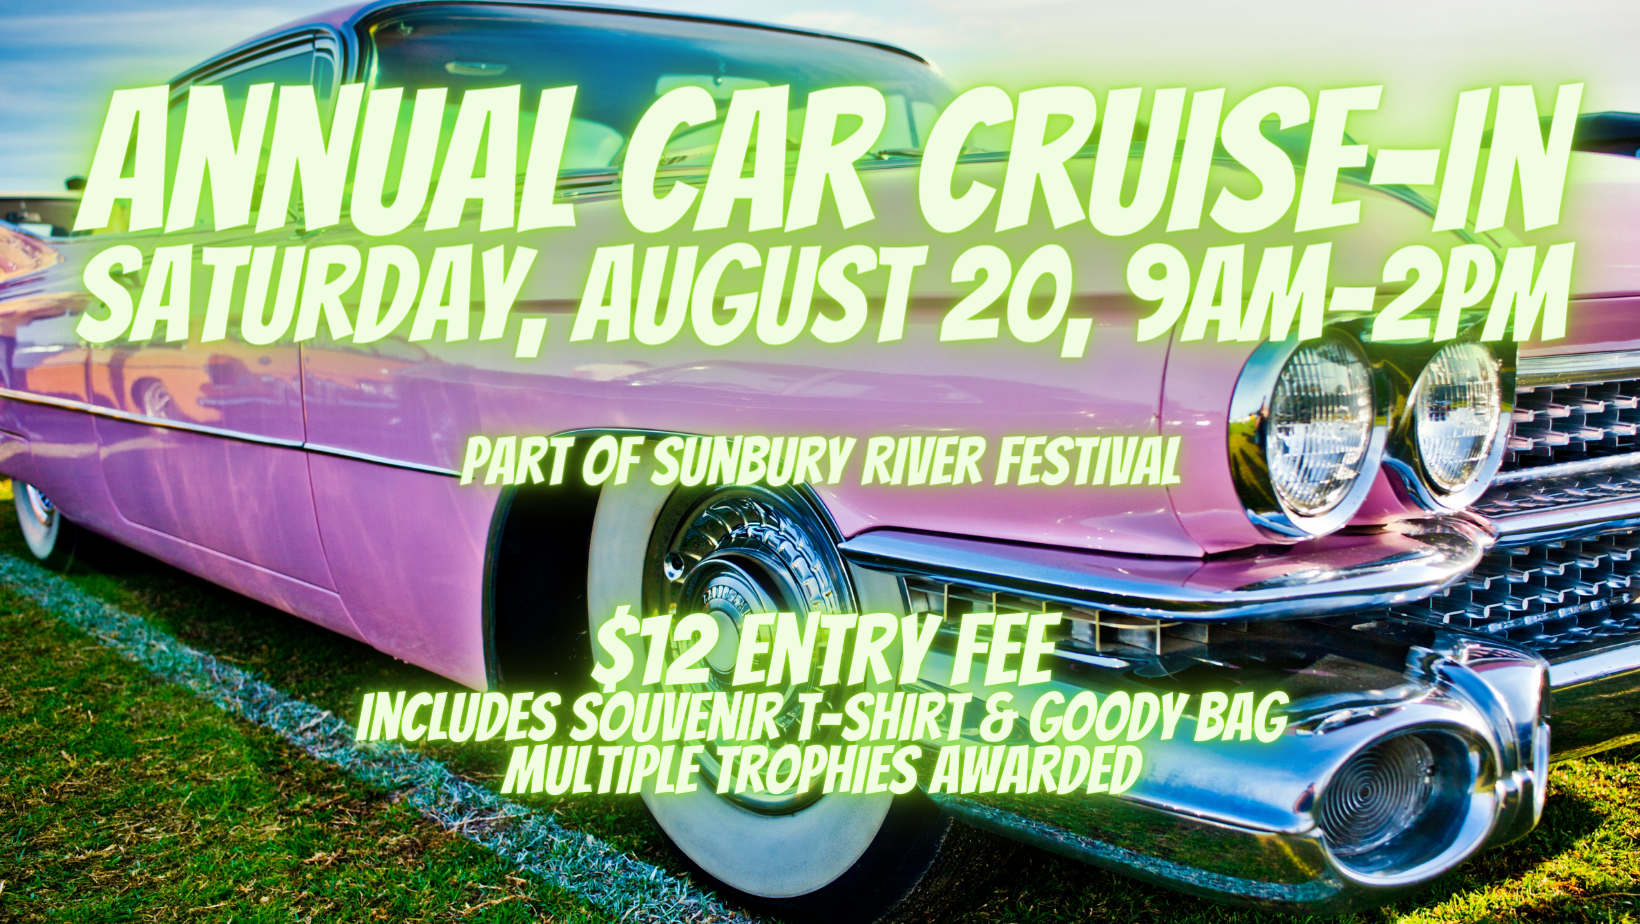 Sunbury River Festival Car Cruise In, August 20, 2002 Downtown Sunbury PA